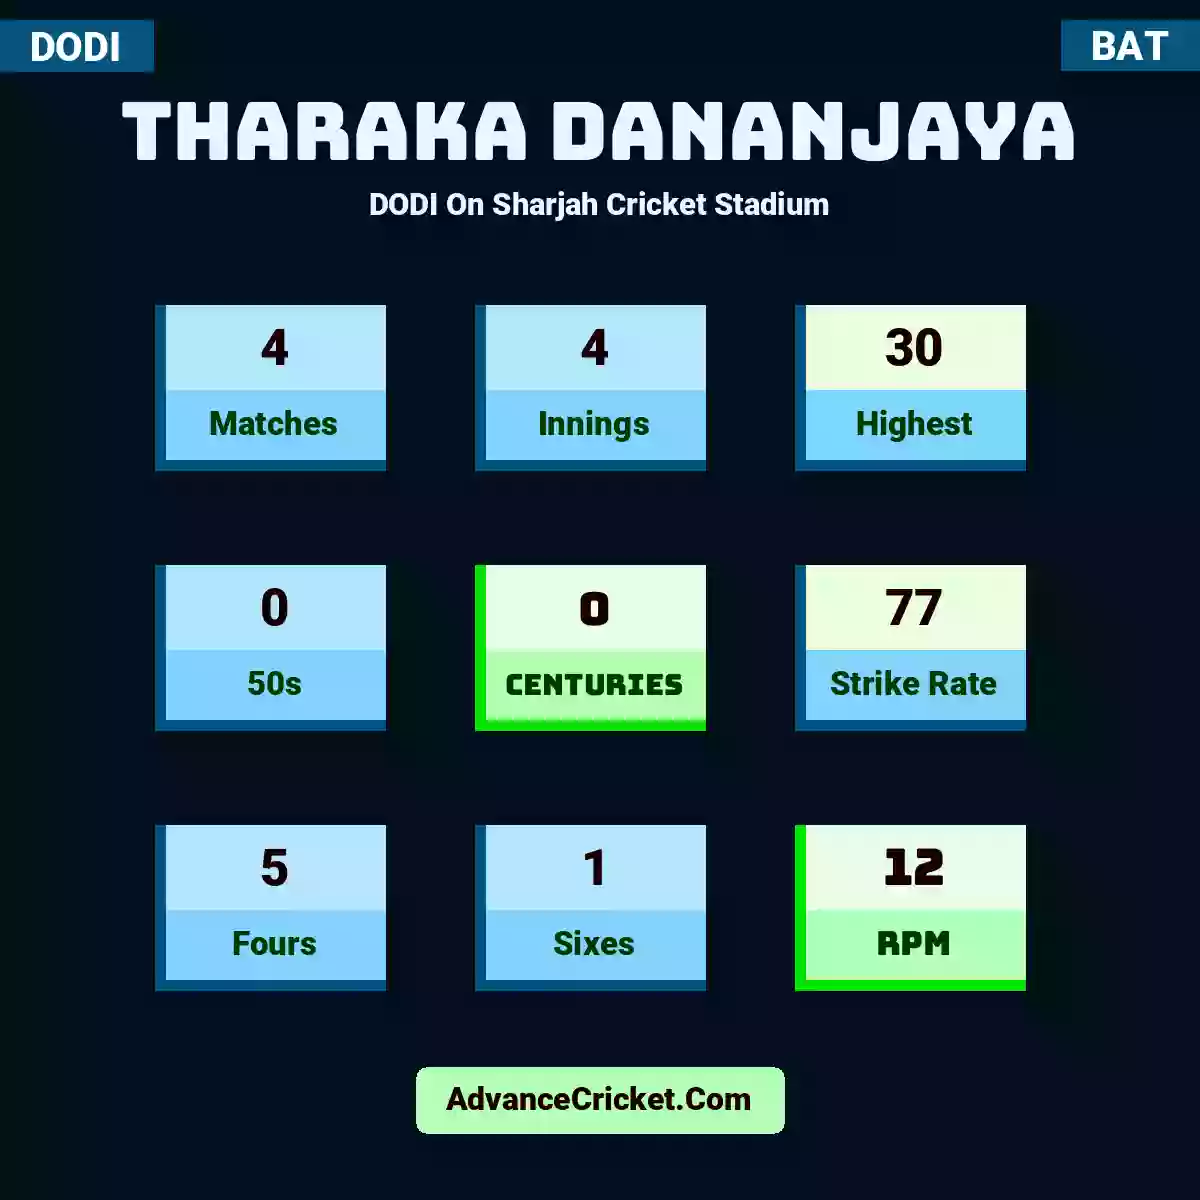 Tharaka Dananjaya DODI  On Sharjah Cricket Stadium, Tharaka Dananjaya played 4 matches, scored 30 runs as highest, 0 half-centuries, and 0 centuries, with a strike rate of 77. T.Dananjaya hit 5 fours and 1 sixes, with an RPM of 12.